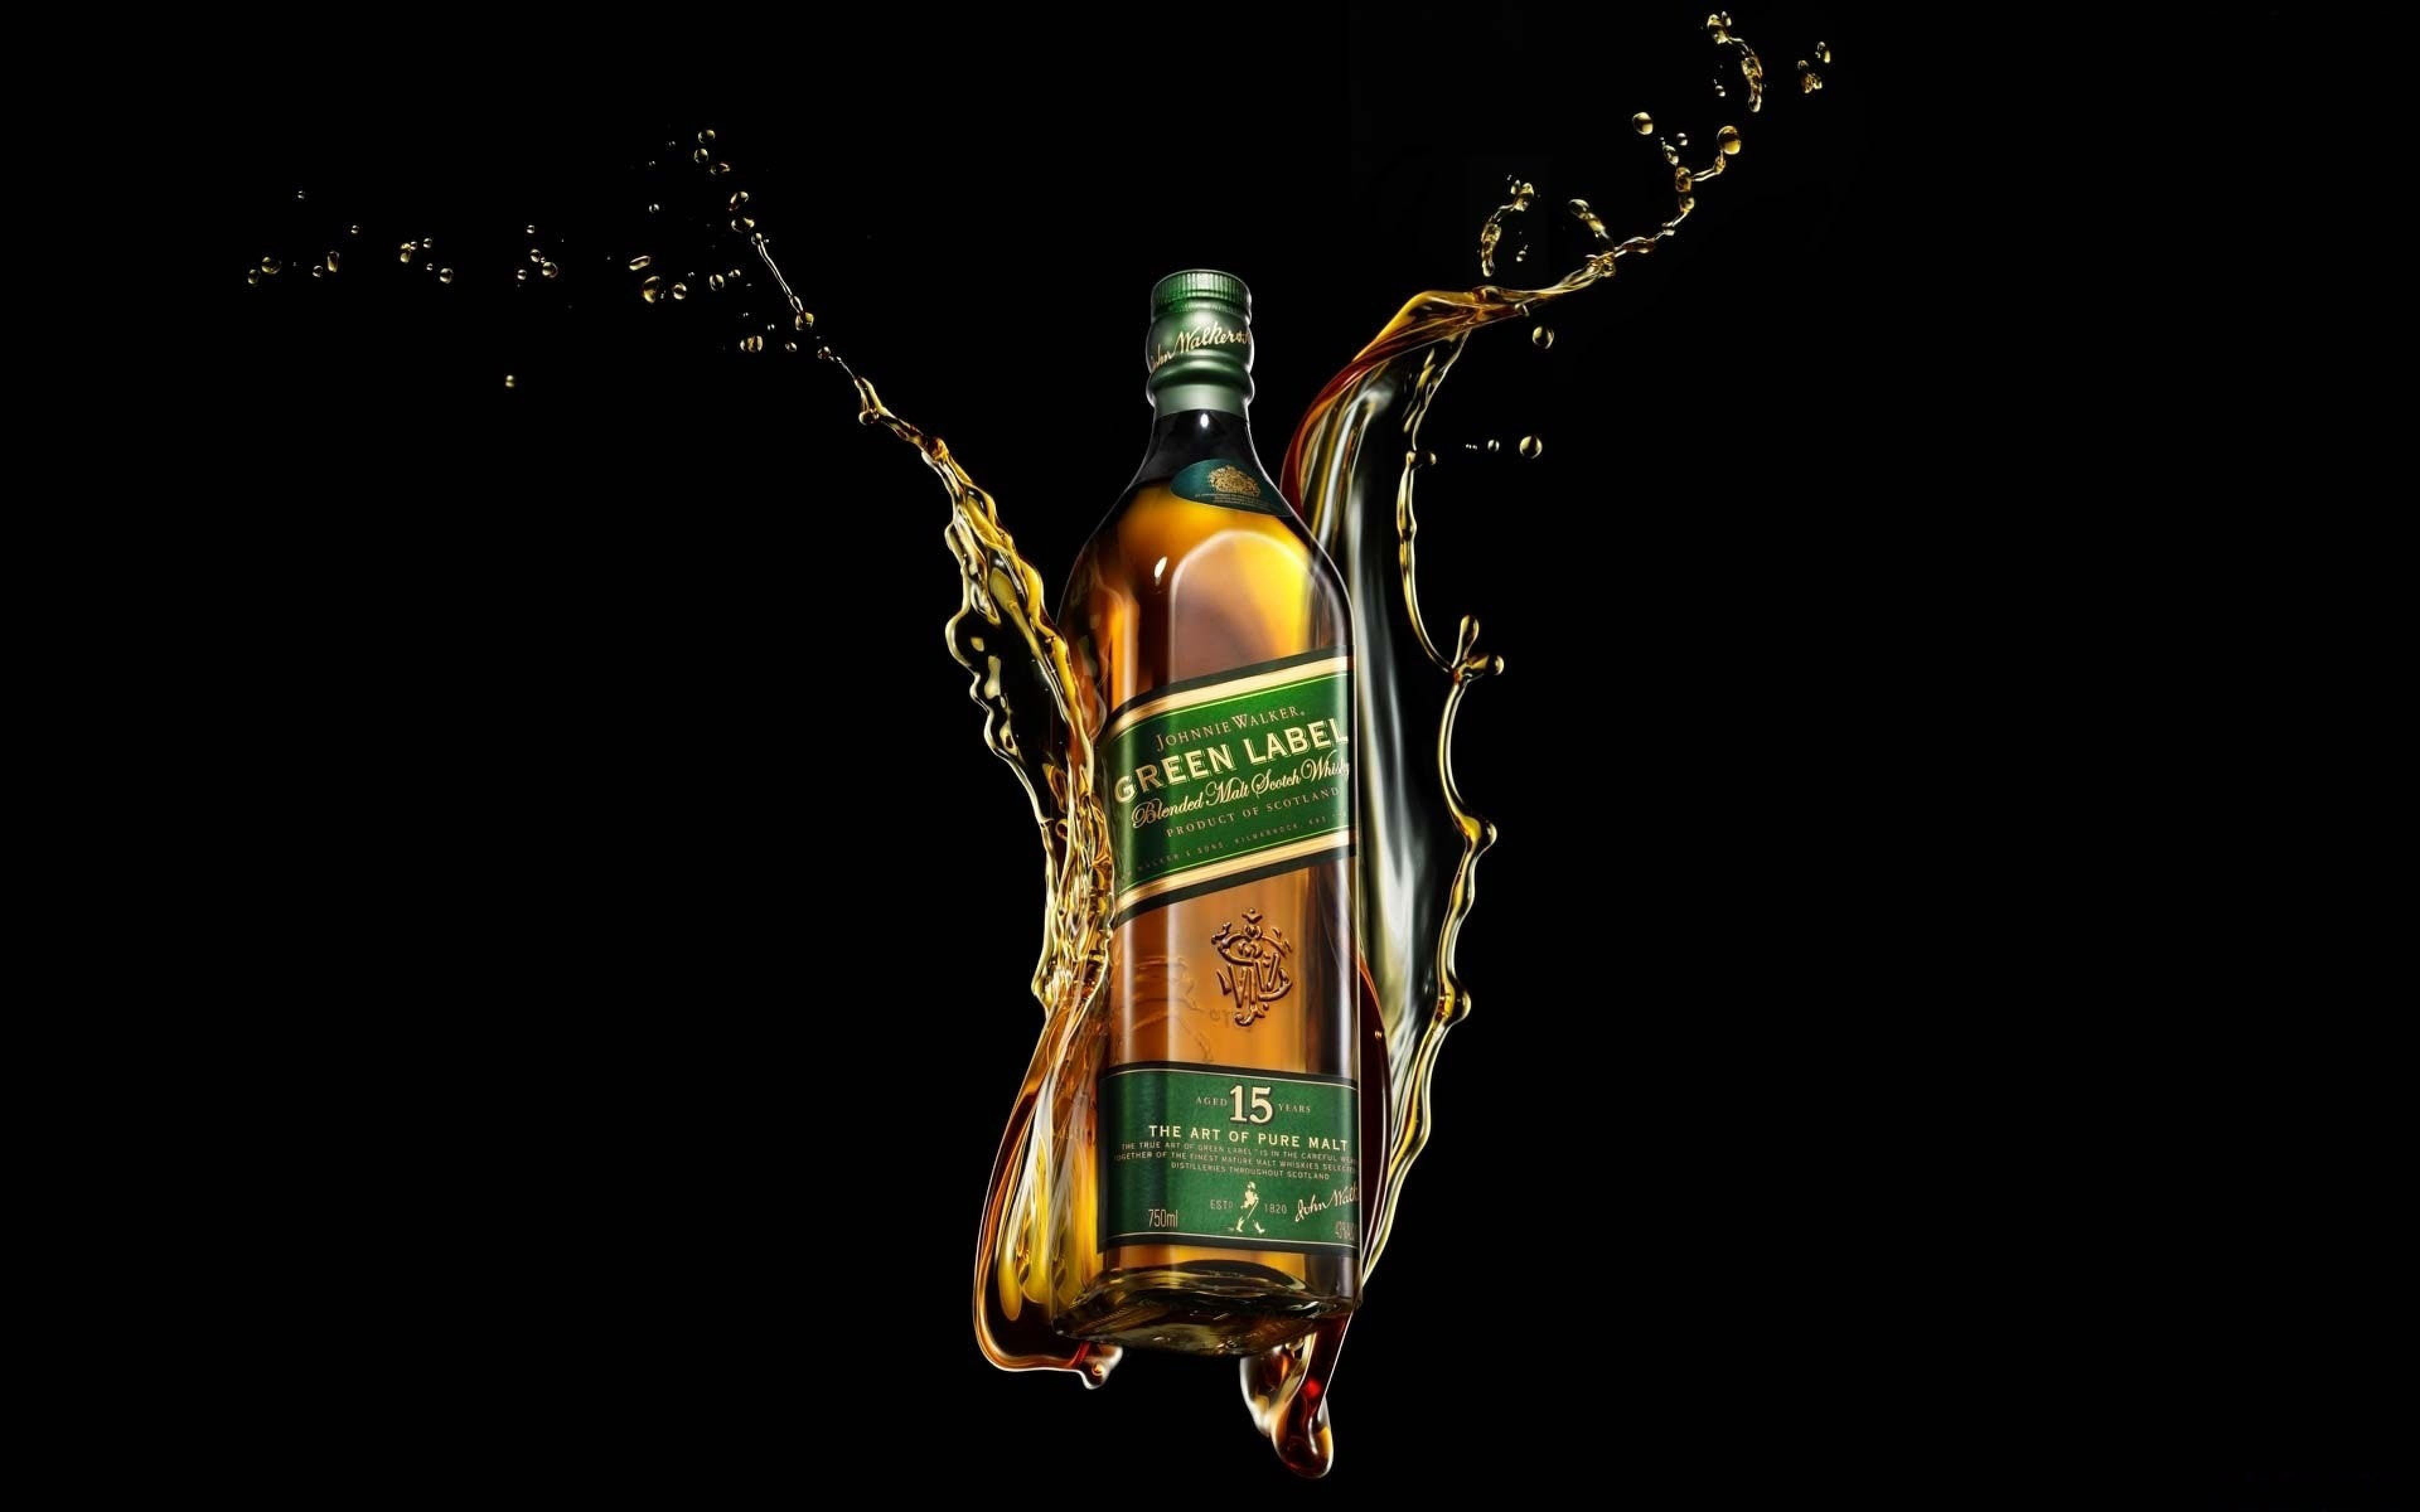 johnnie walker, green label backgrounds, whiskey, Bottle, brand